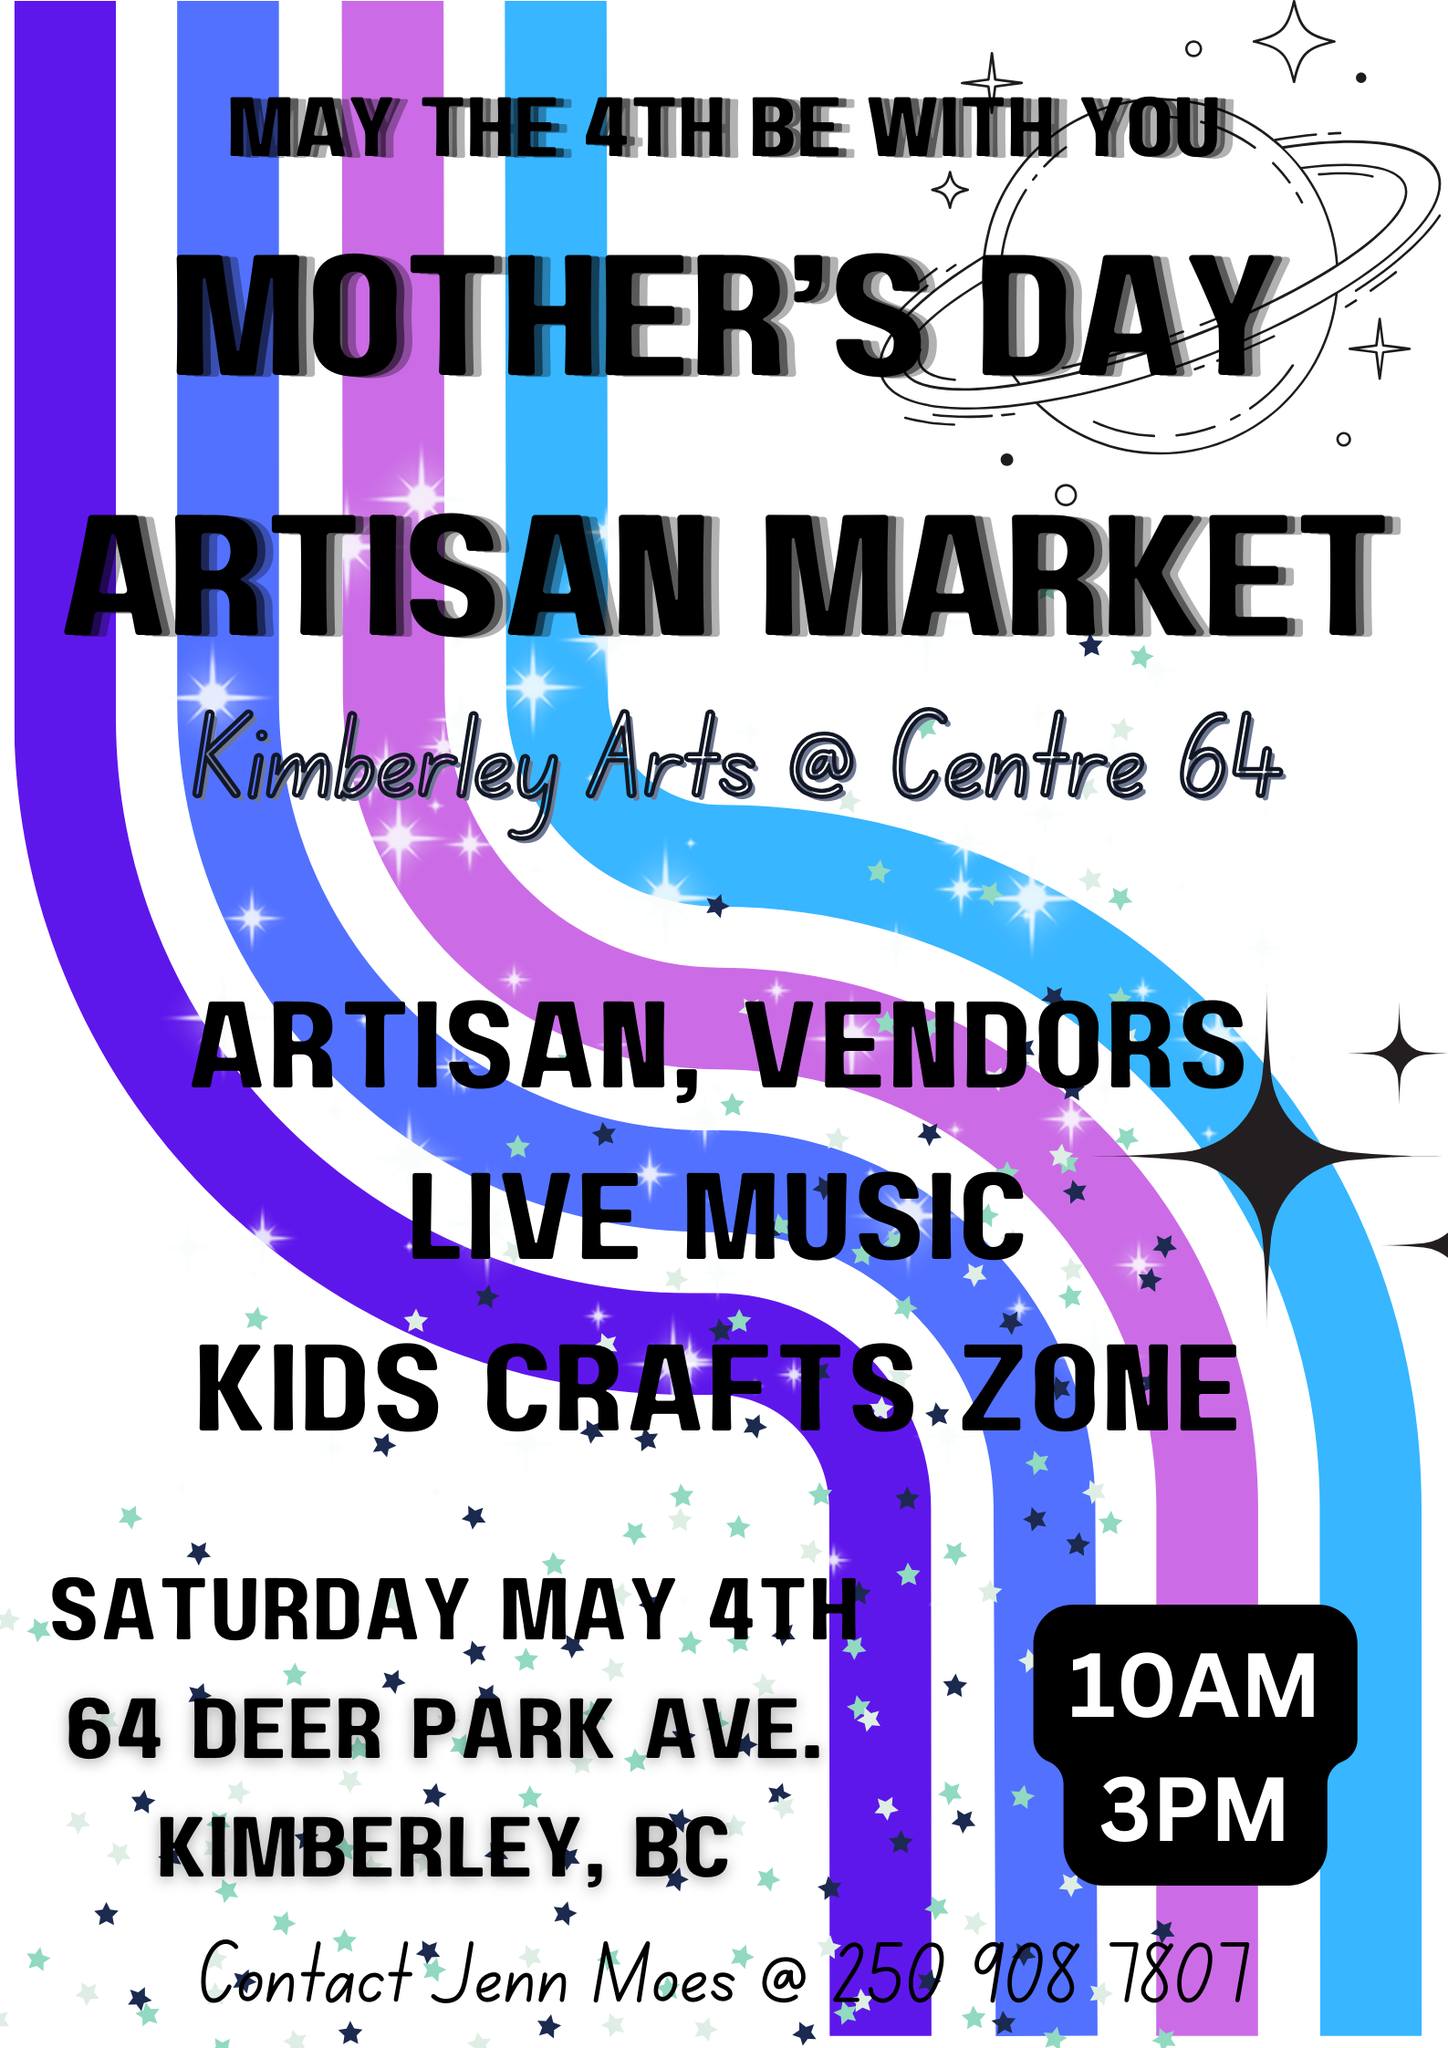 Mother’s Day Artisan Market